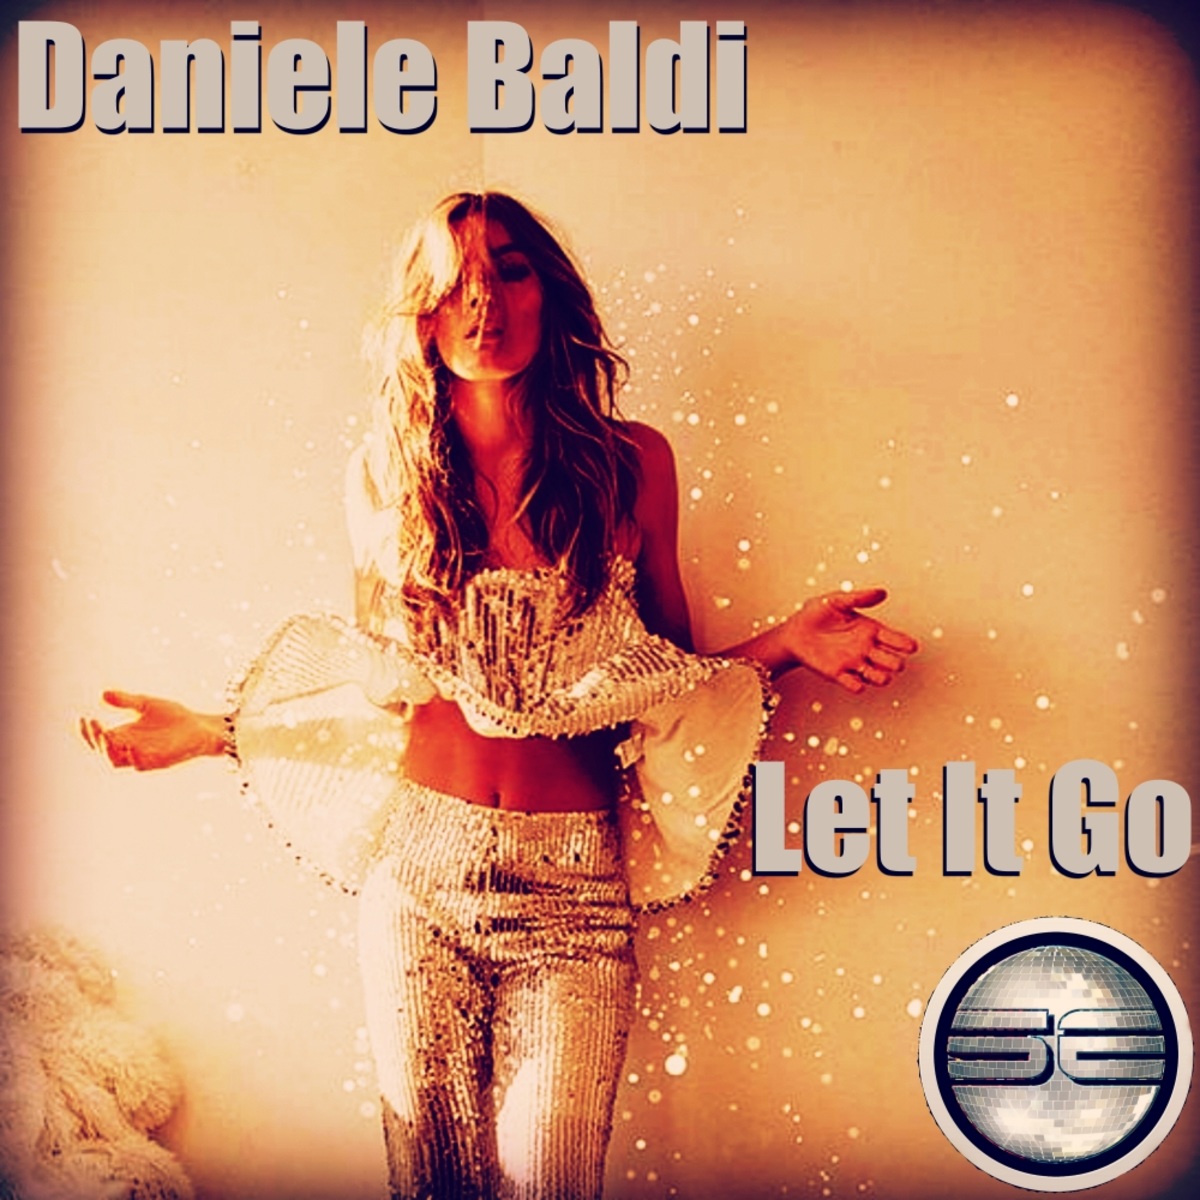 Daniele Baldi - Let It Go / Soulful Evolution